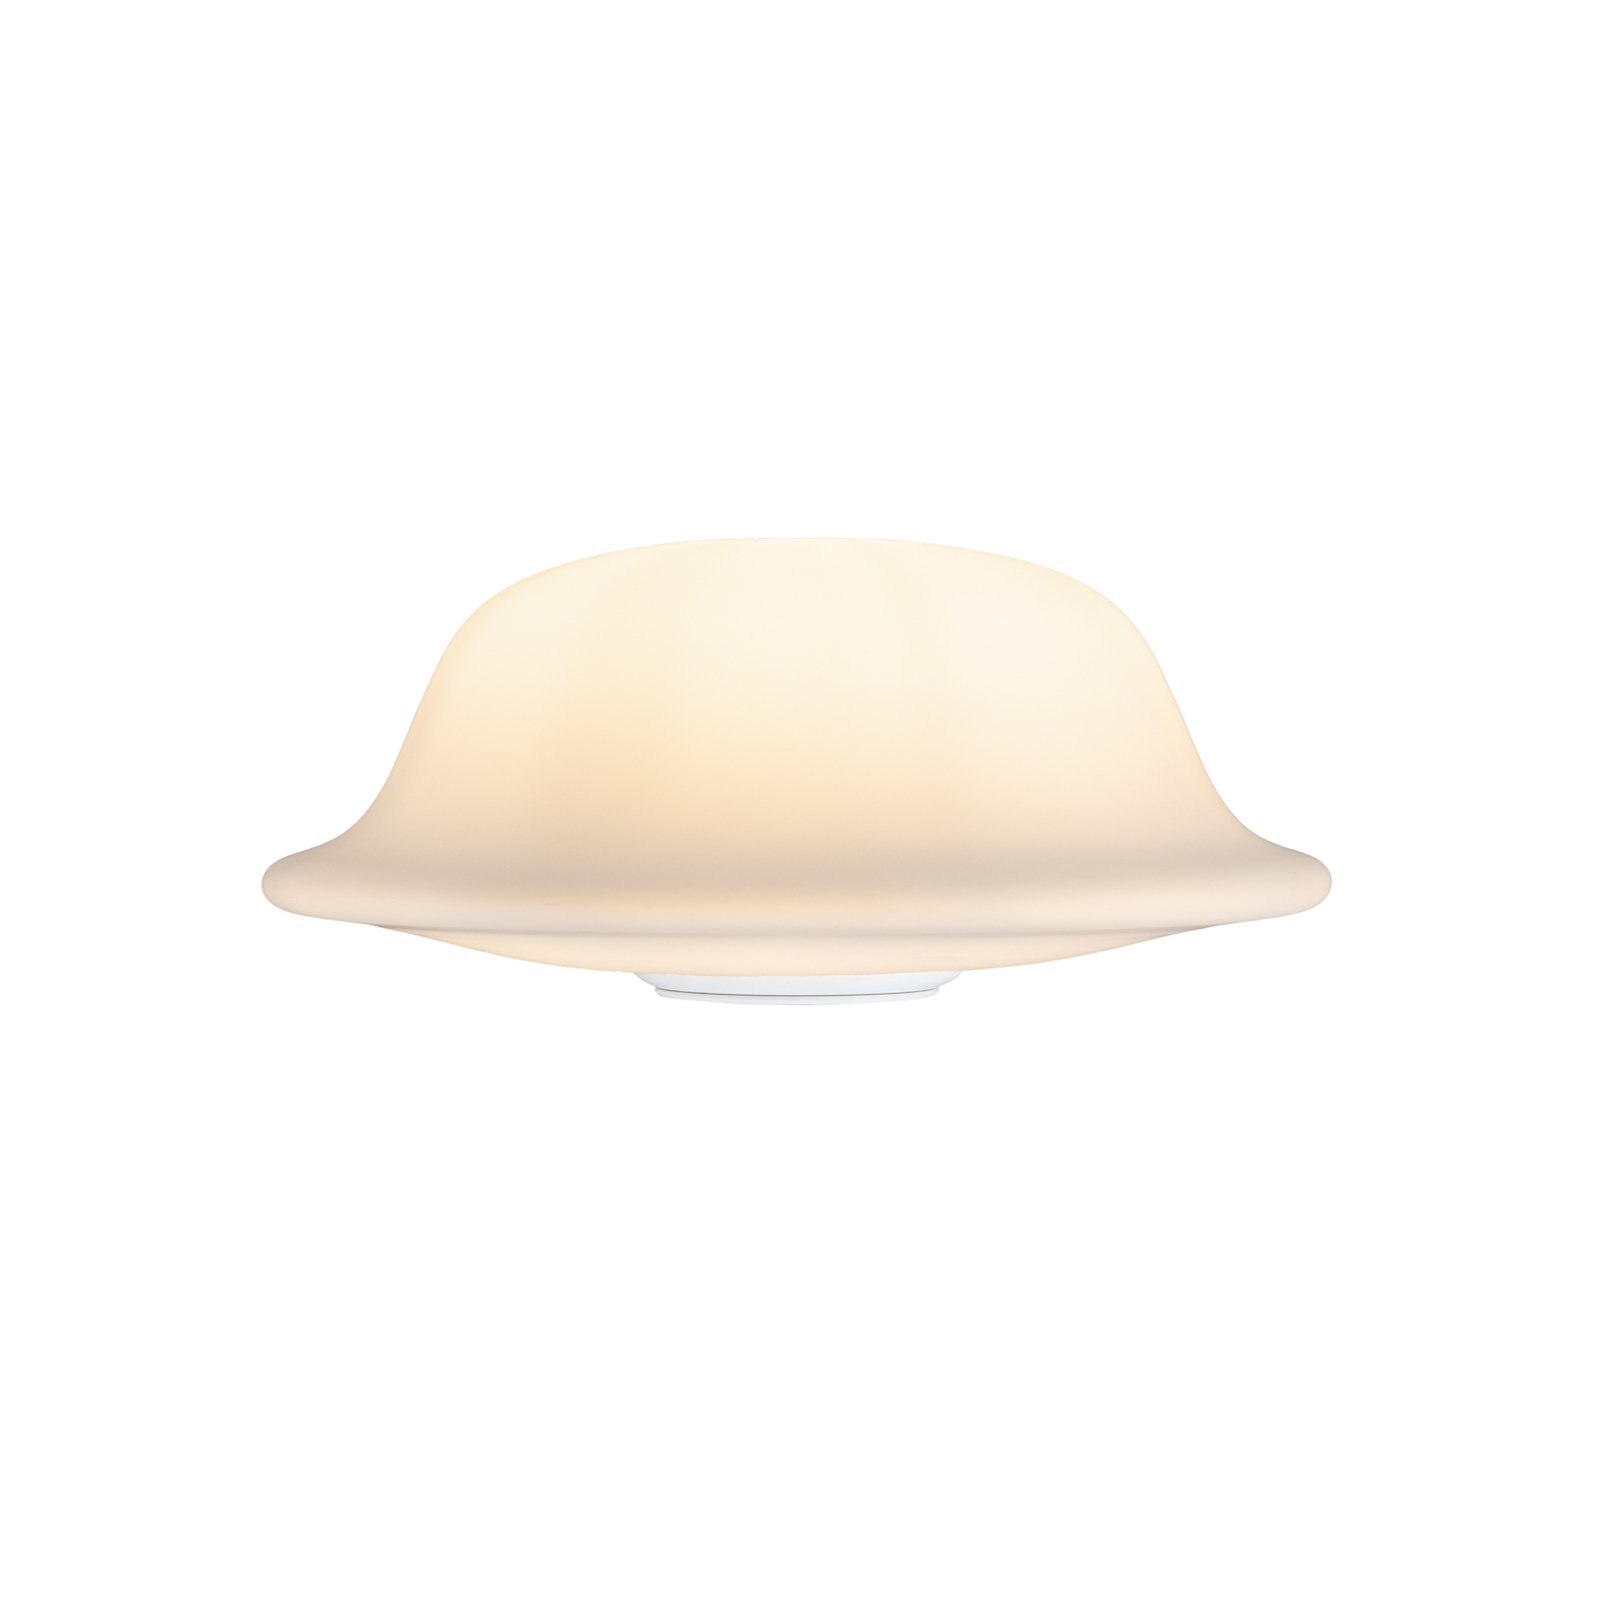 UMAGE Butler table lamp glass shade, brass base